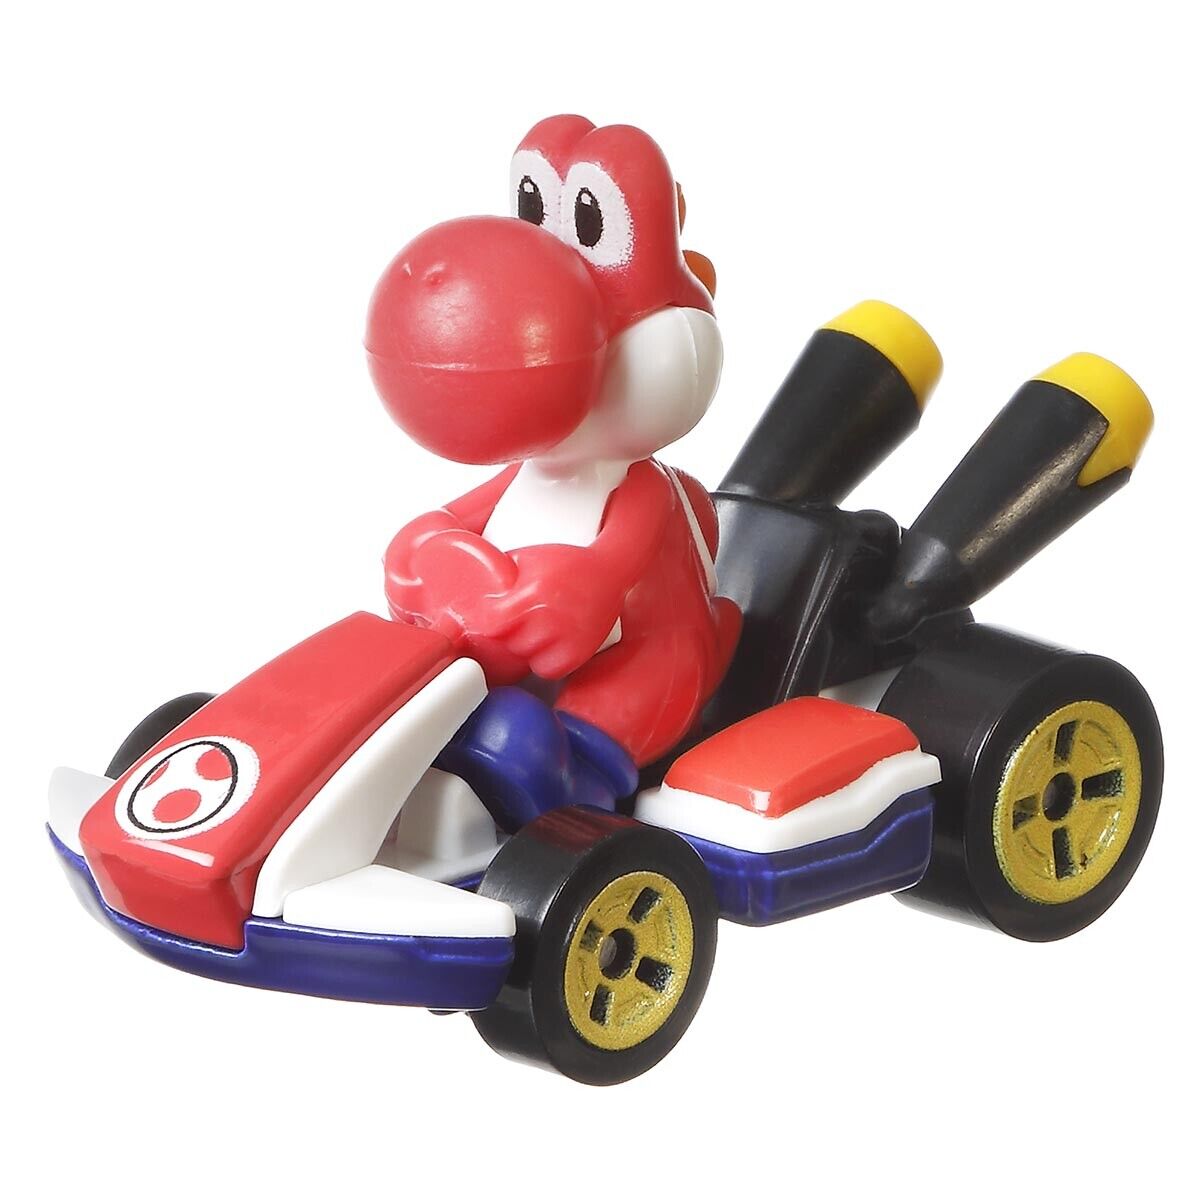 Hot Wheels Mario Kart Red Yoshi Figurine